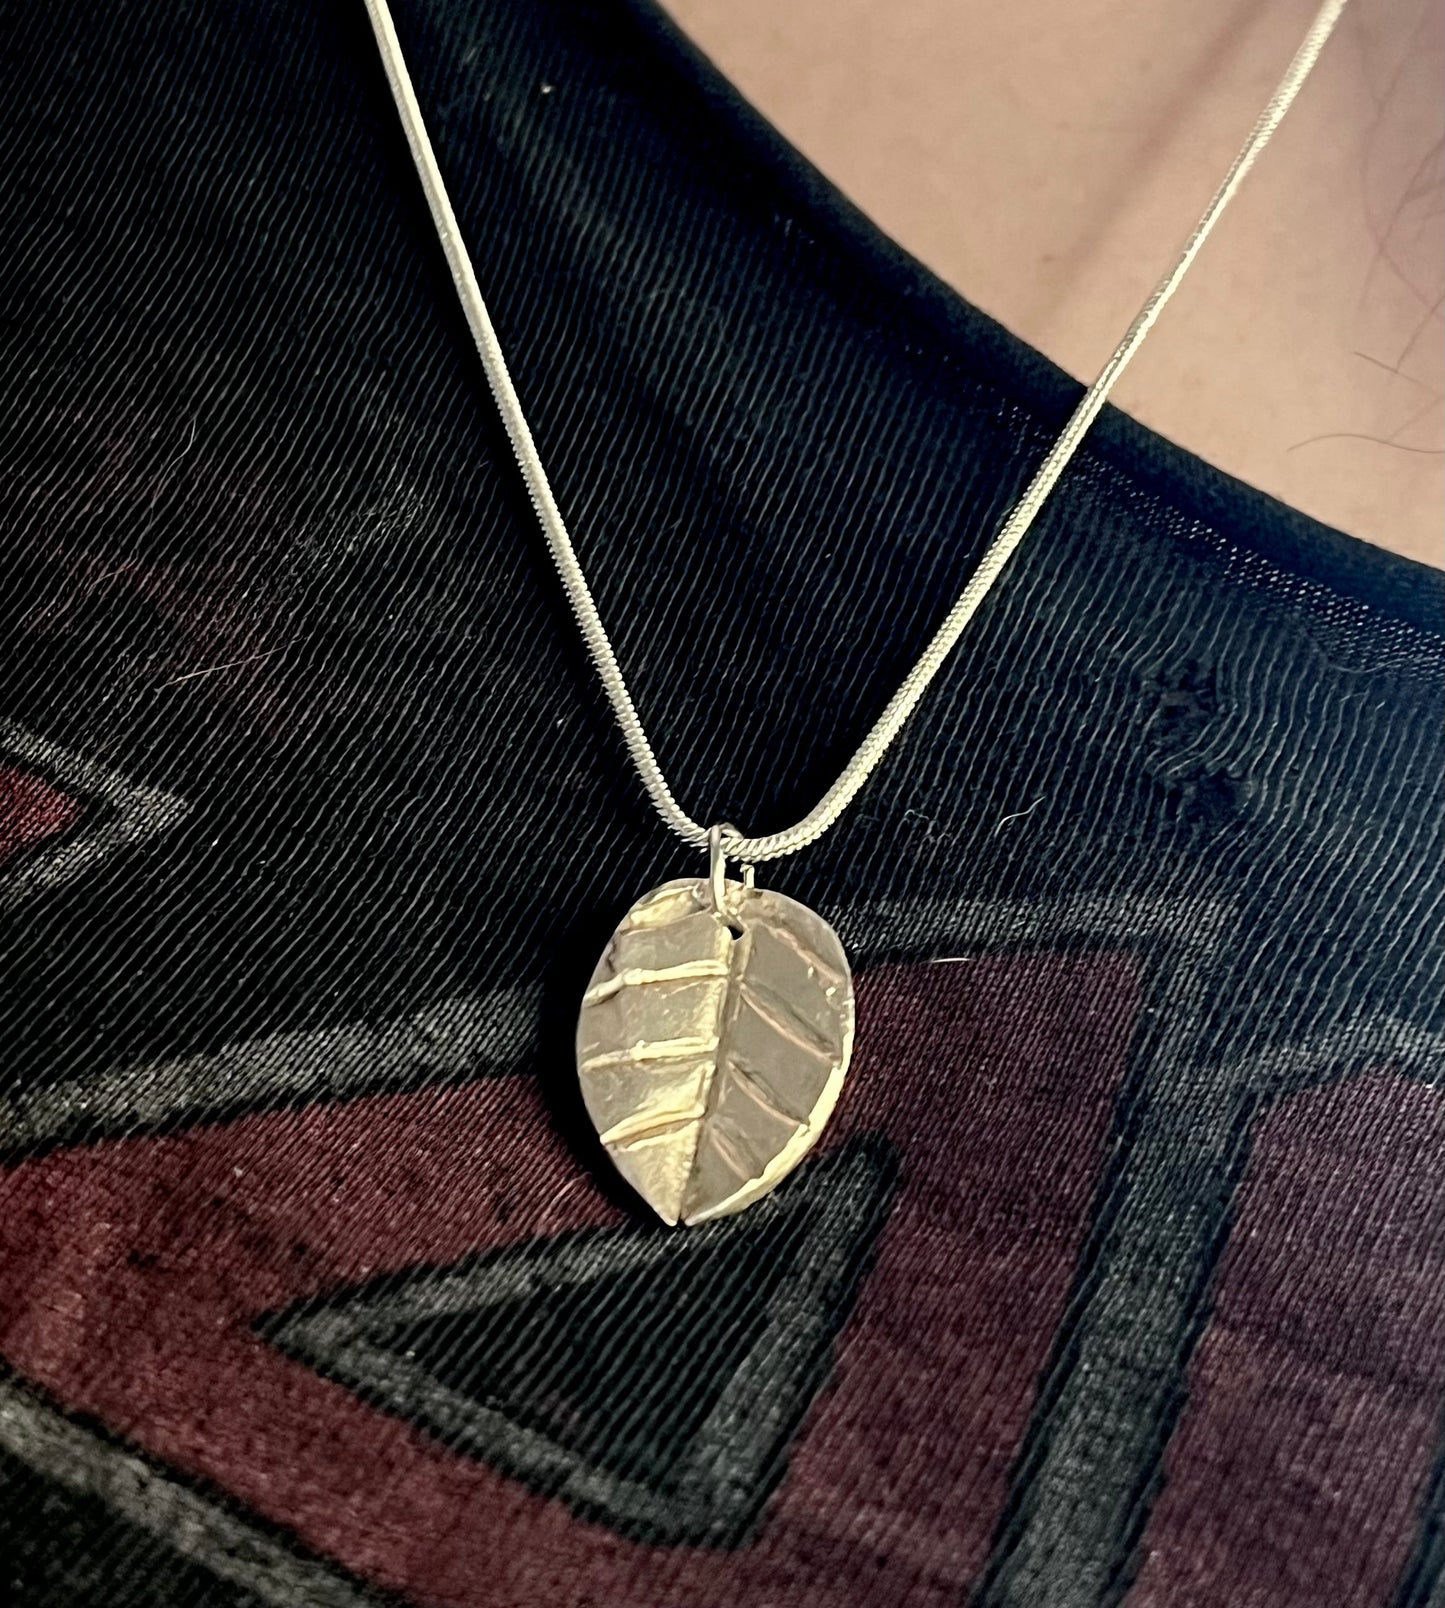 Handmade Silver Leaf Pendant Necklace